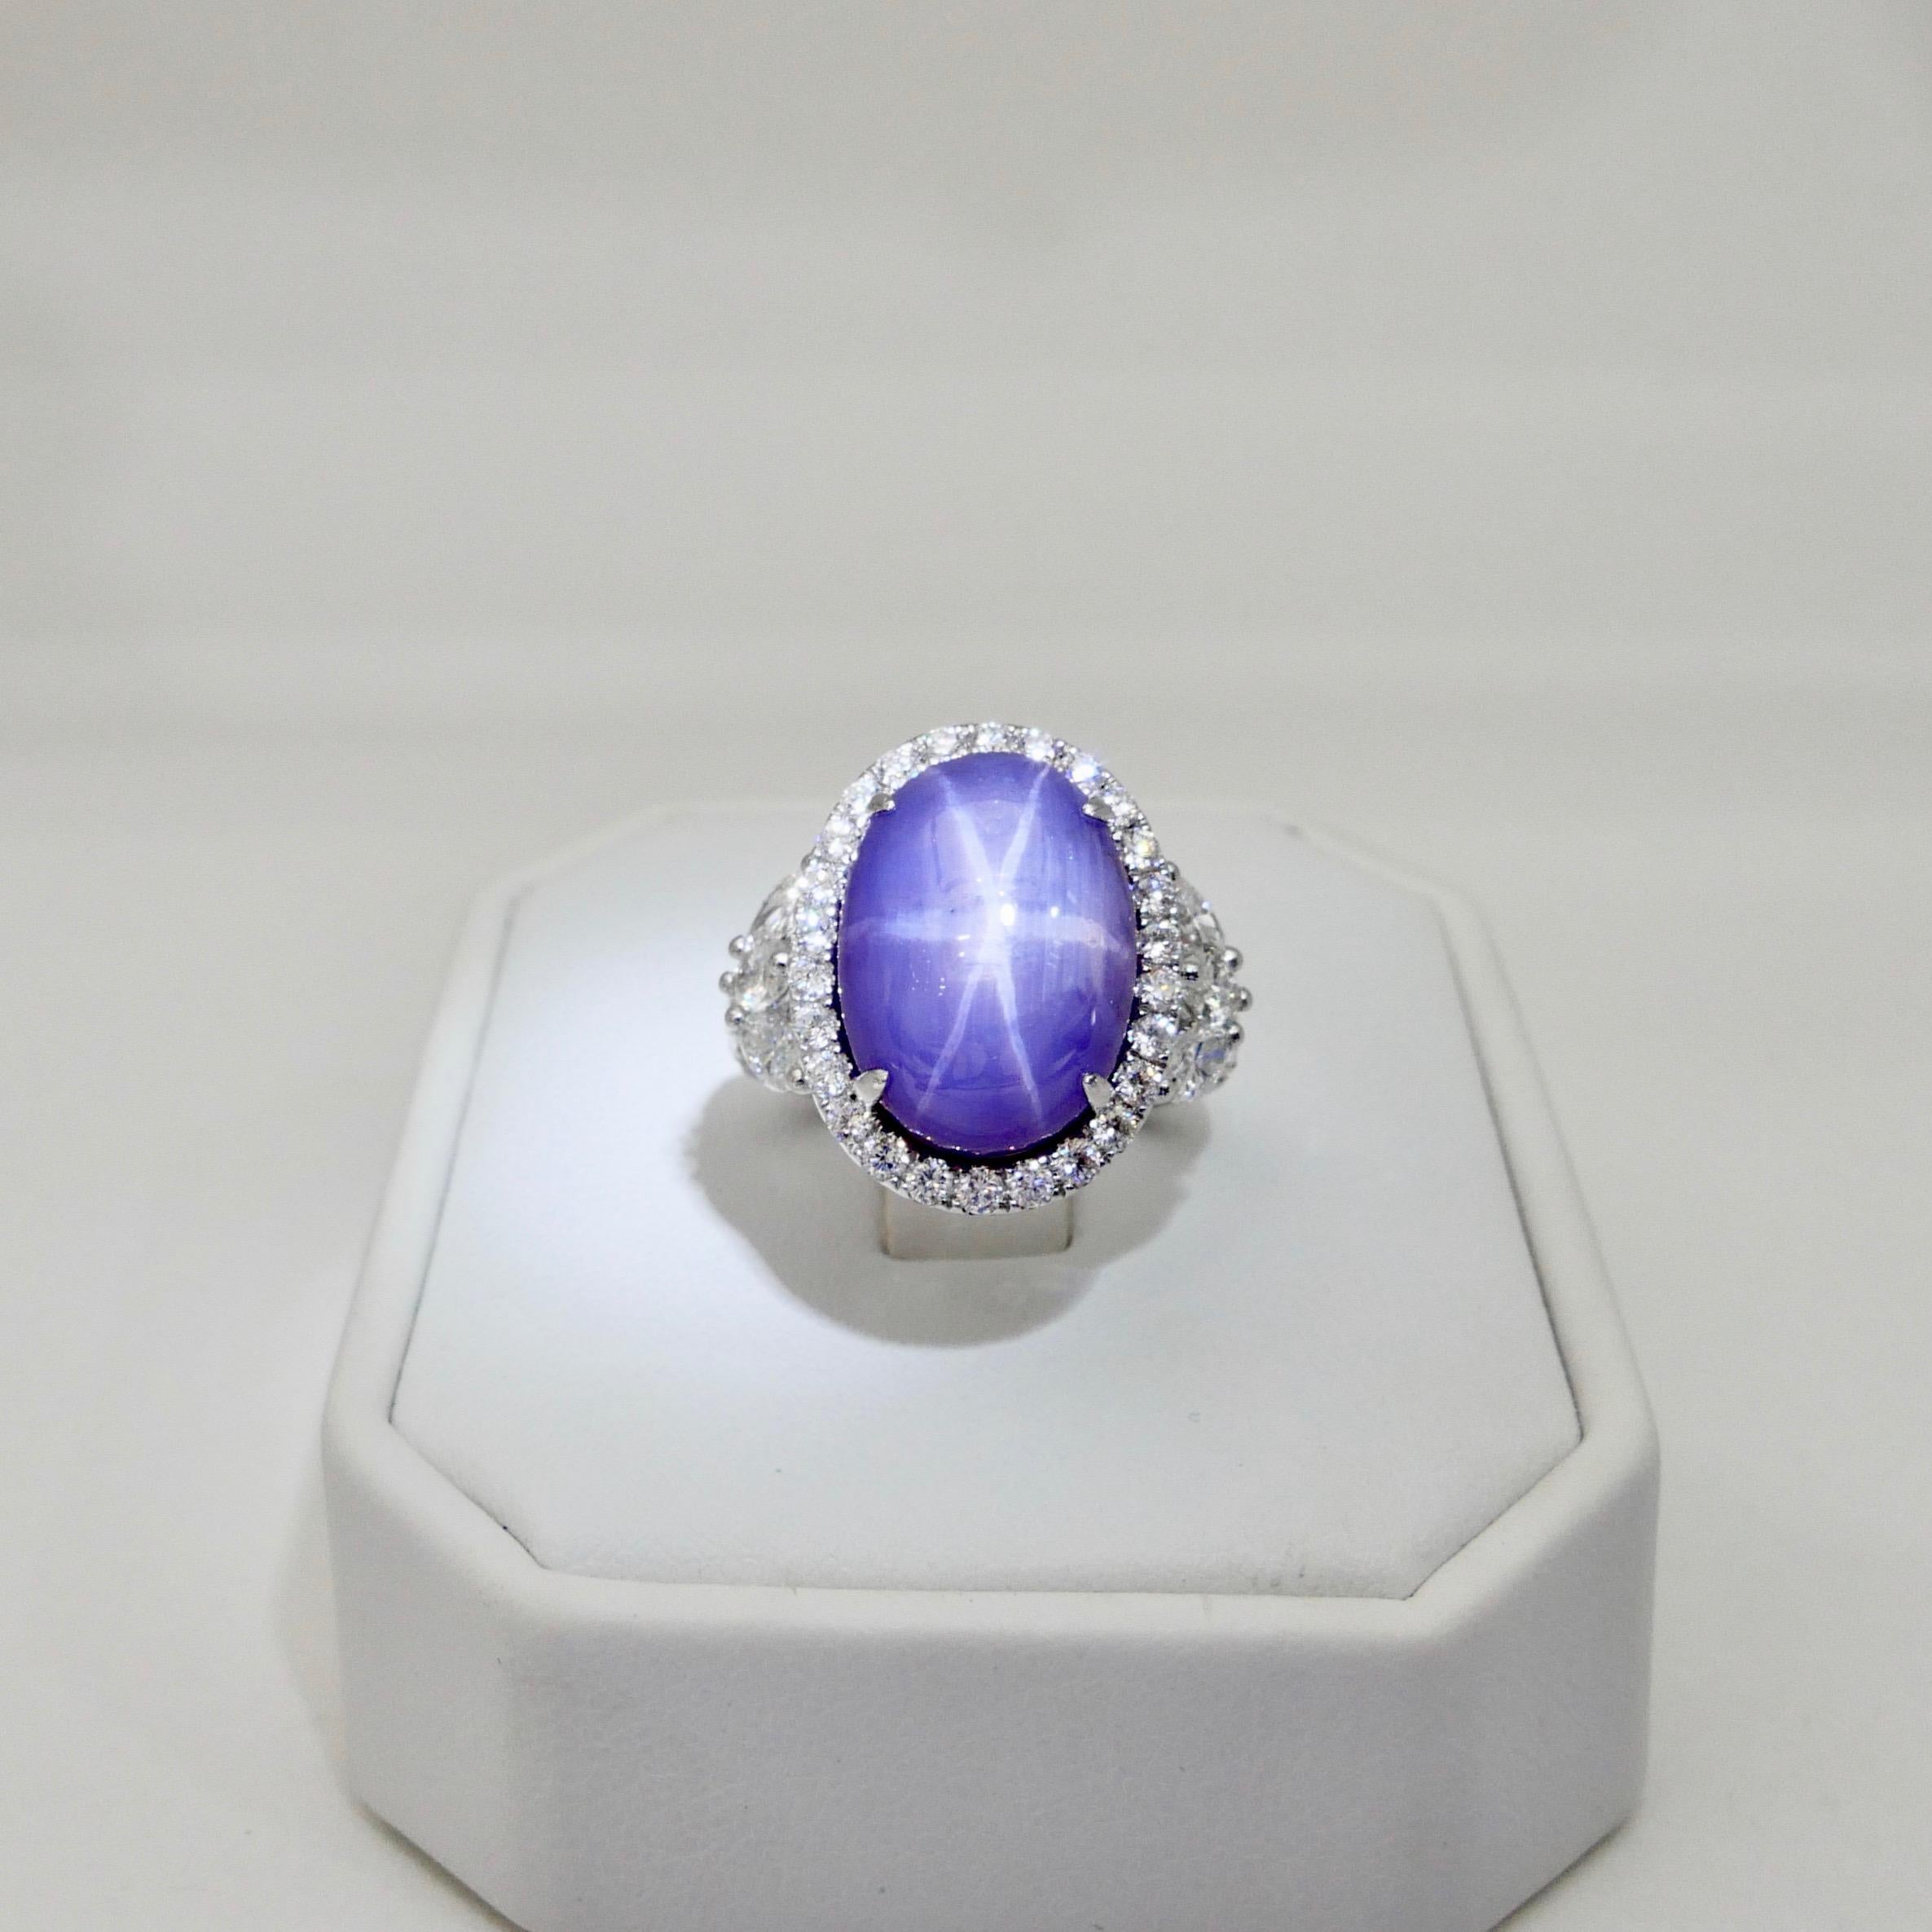 Certified Purple Star Sapphire 20.70 Carat Diamond Cocktail Ring, Statement Ring 3